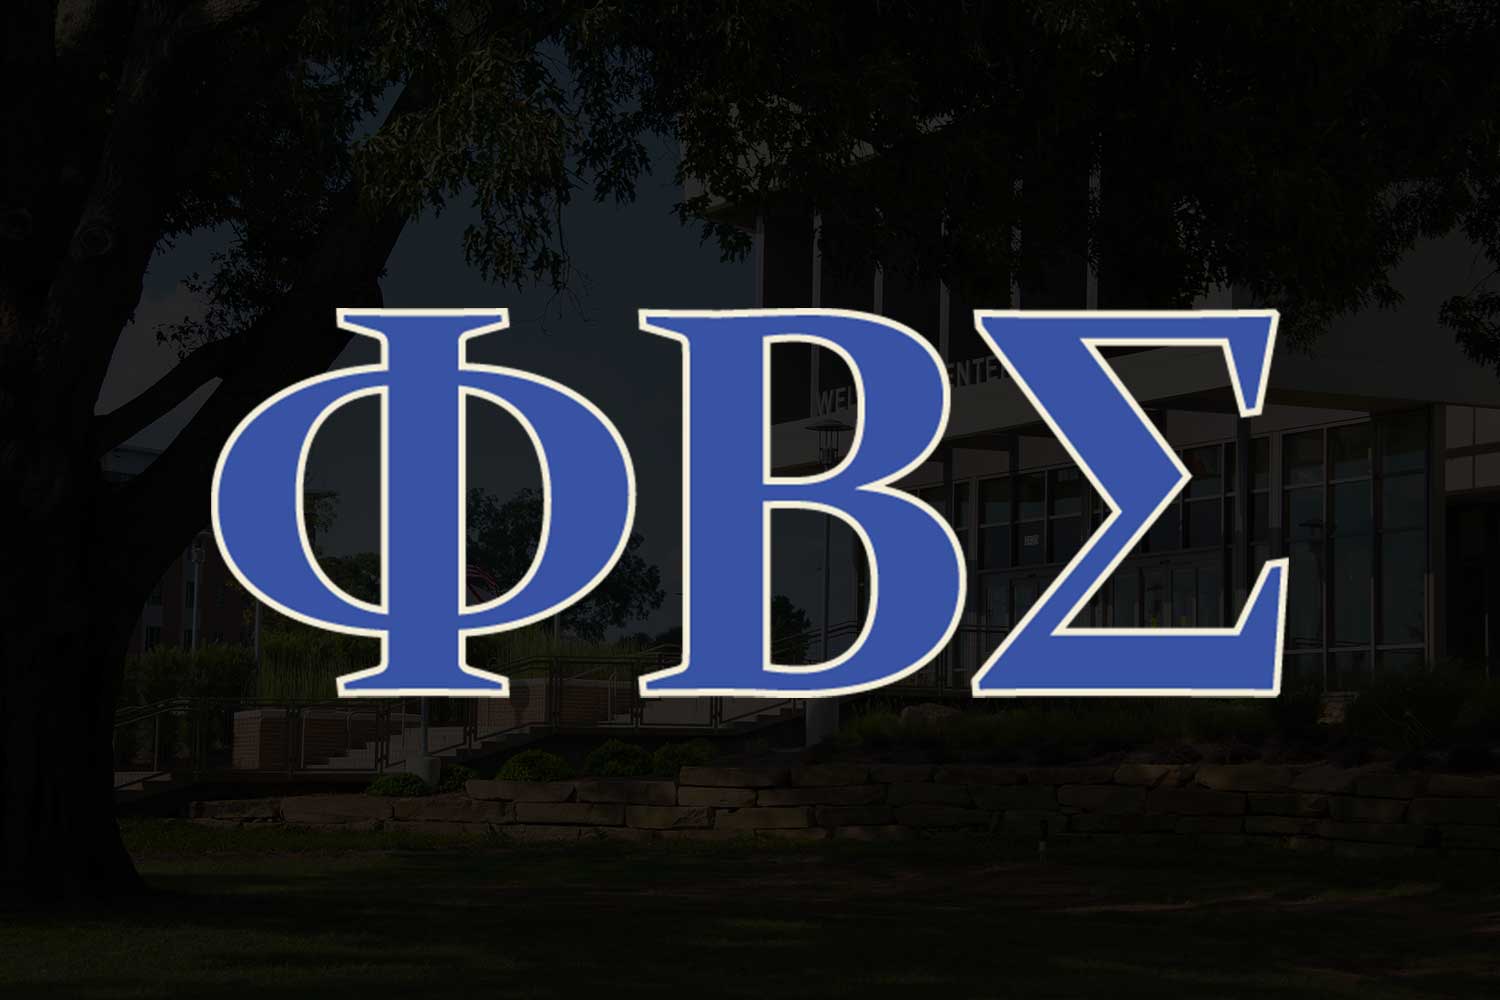 Phi Beta Sigma Fraternity logo